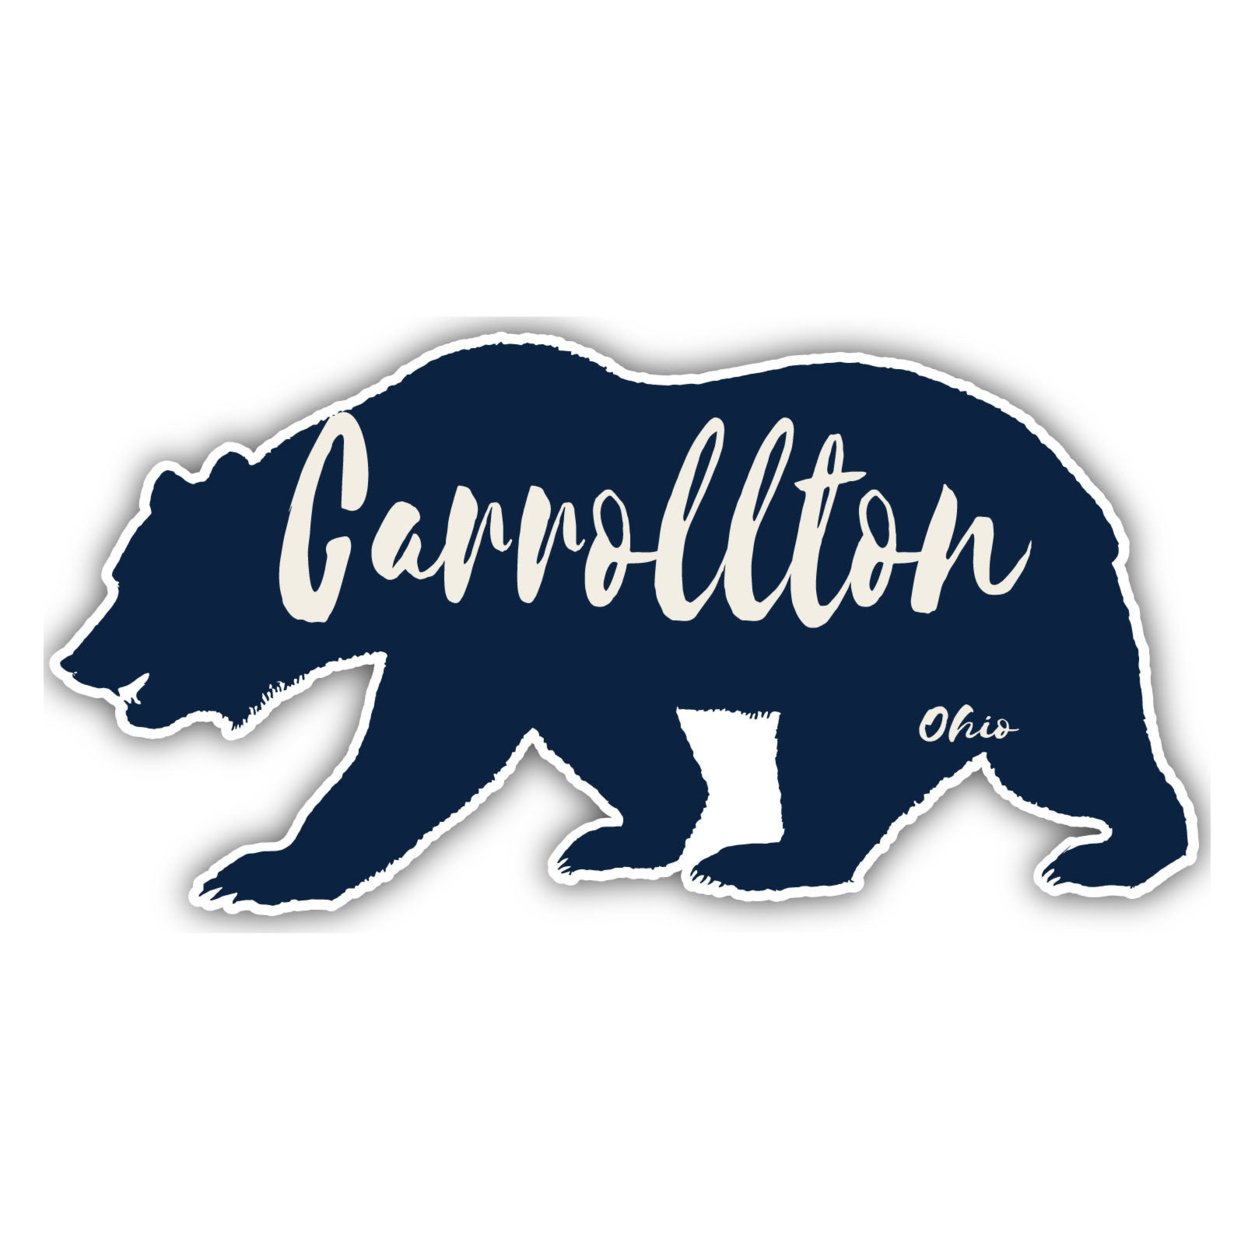 Carrollton Ohio Souvenir Decorative Stickers (Choose Theme And Size) - 4-Pack, 12-Inch, Bear